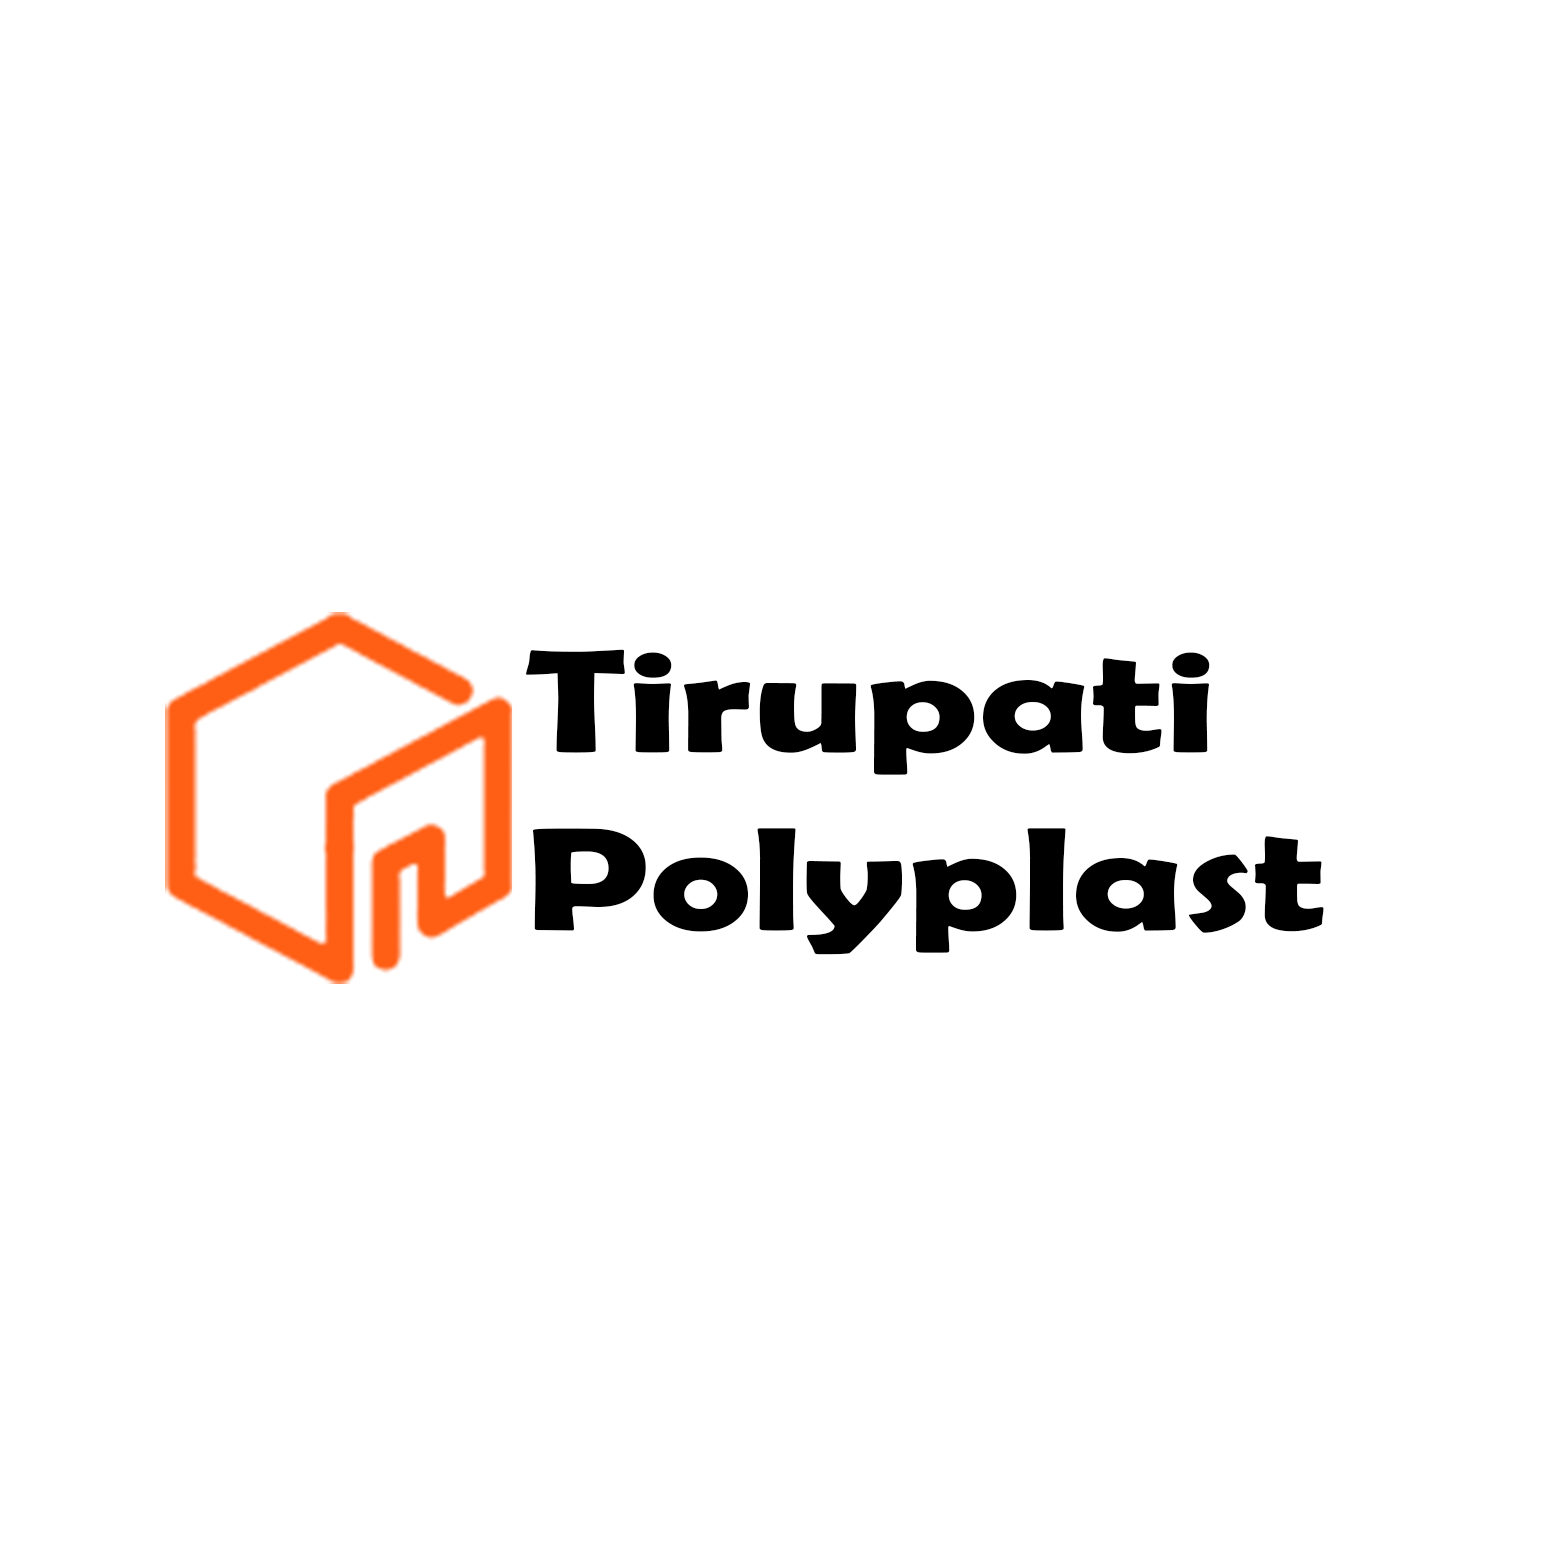 Tirupati Polyplast